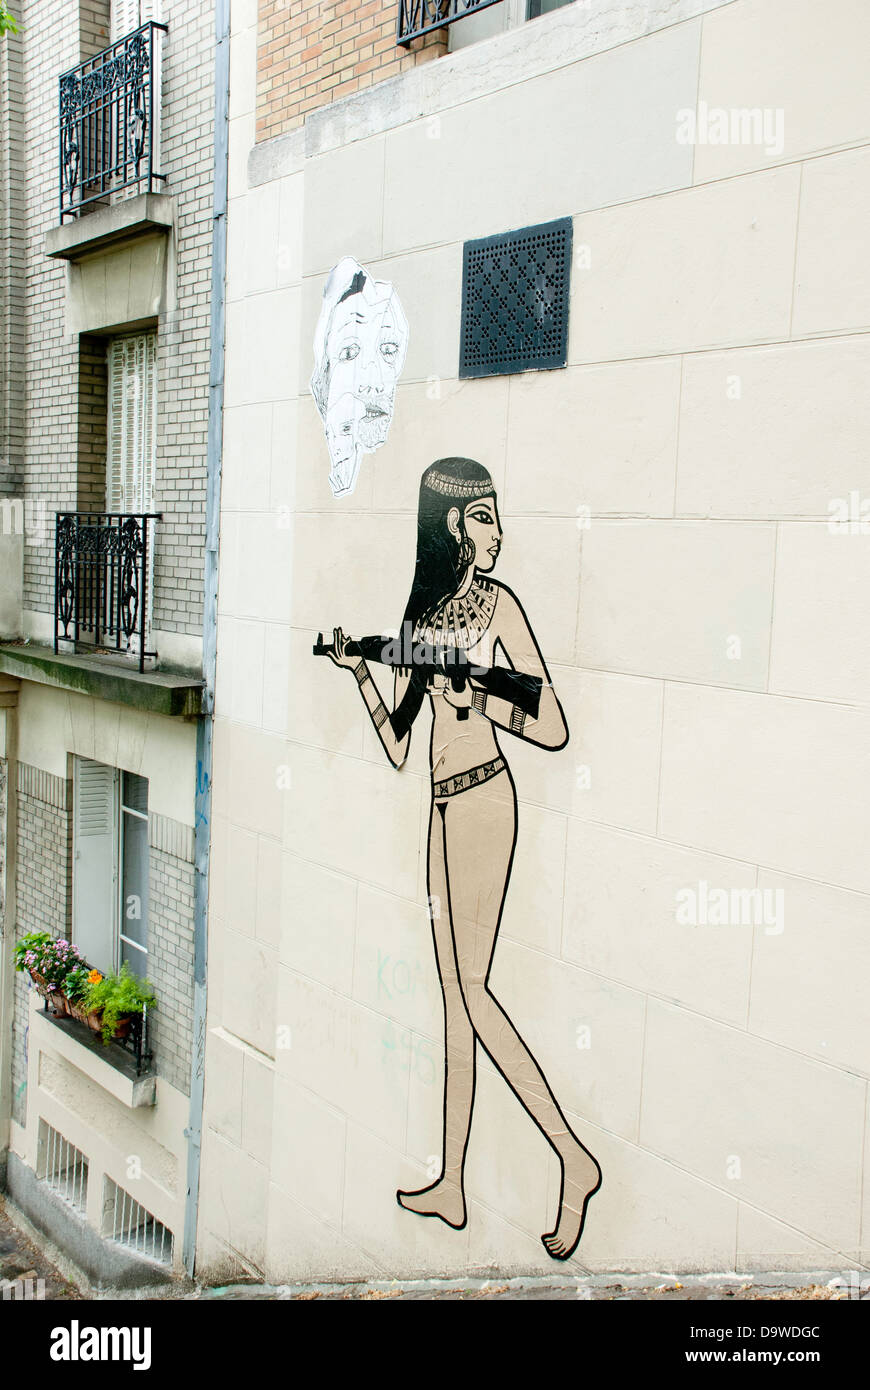 Graffiti/collage art on a wall in Rue Foyatier, Paris, depicting Egyptian woman holding a machine gun Stock Photo